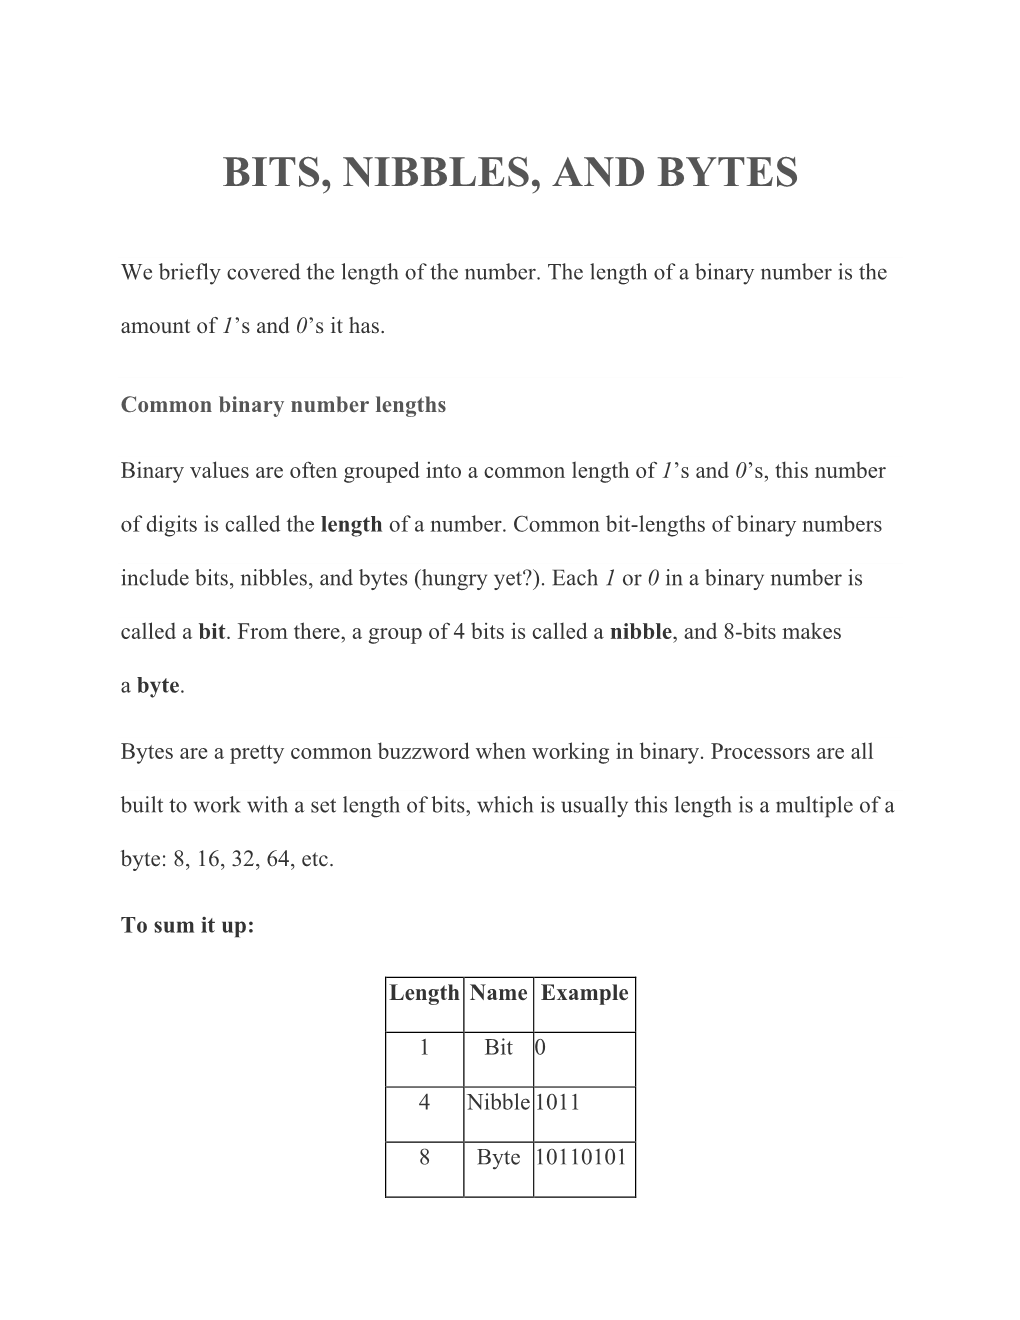 Bits, Nibbles, and Bytes